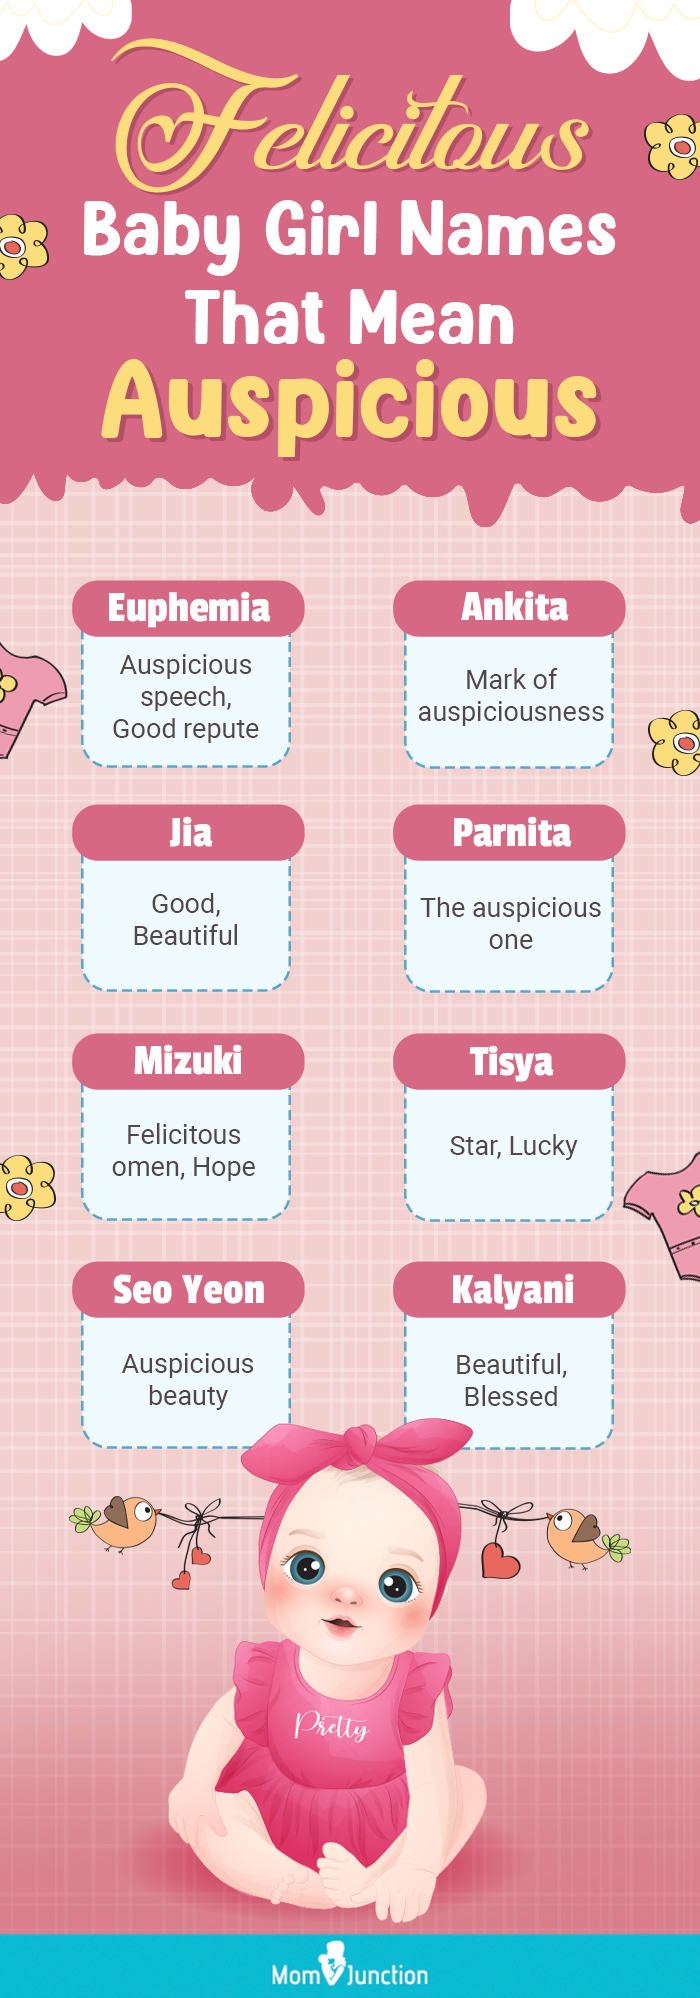 Felicitous Baby Girl Names That Mean Auspicious (infographic)